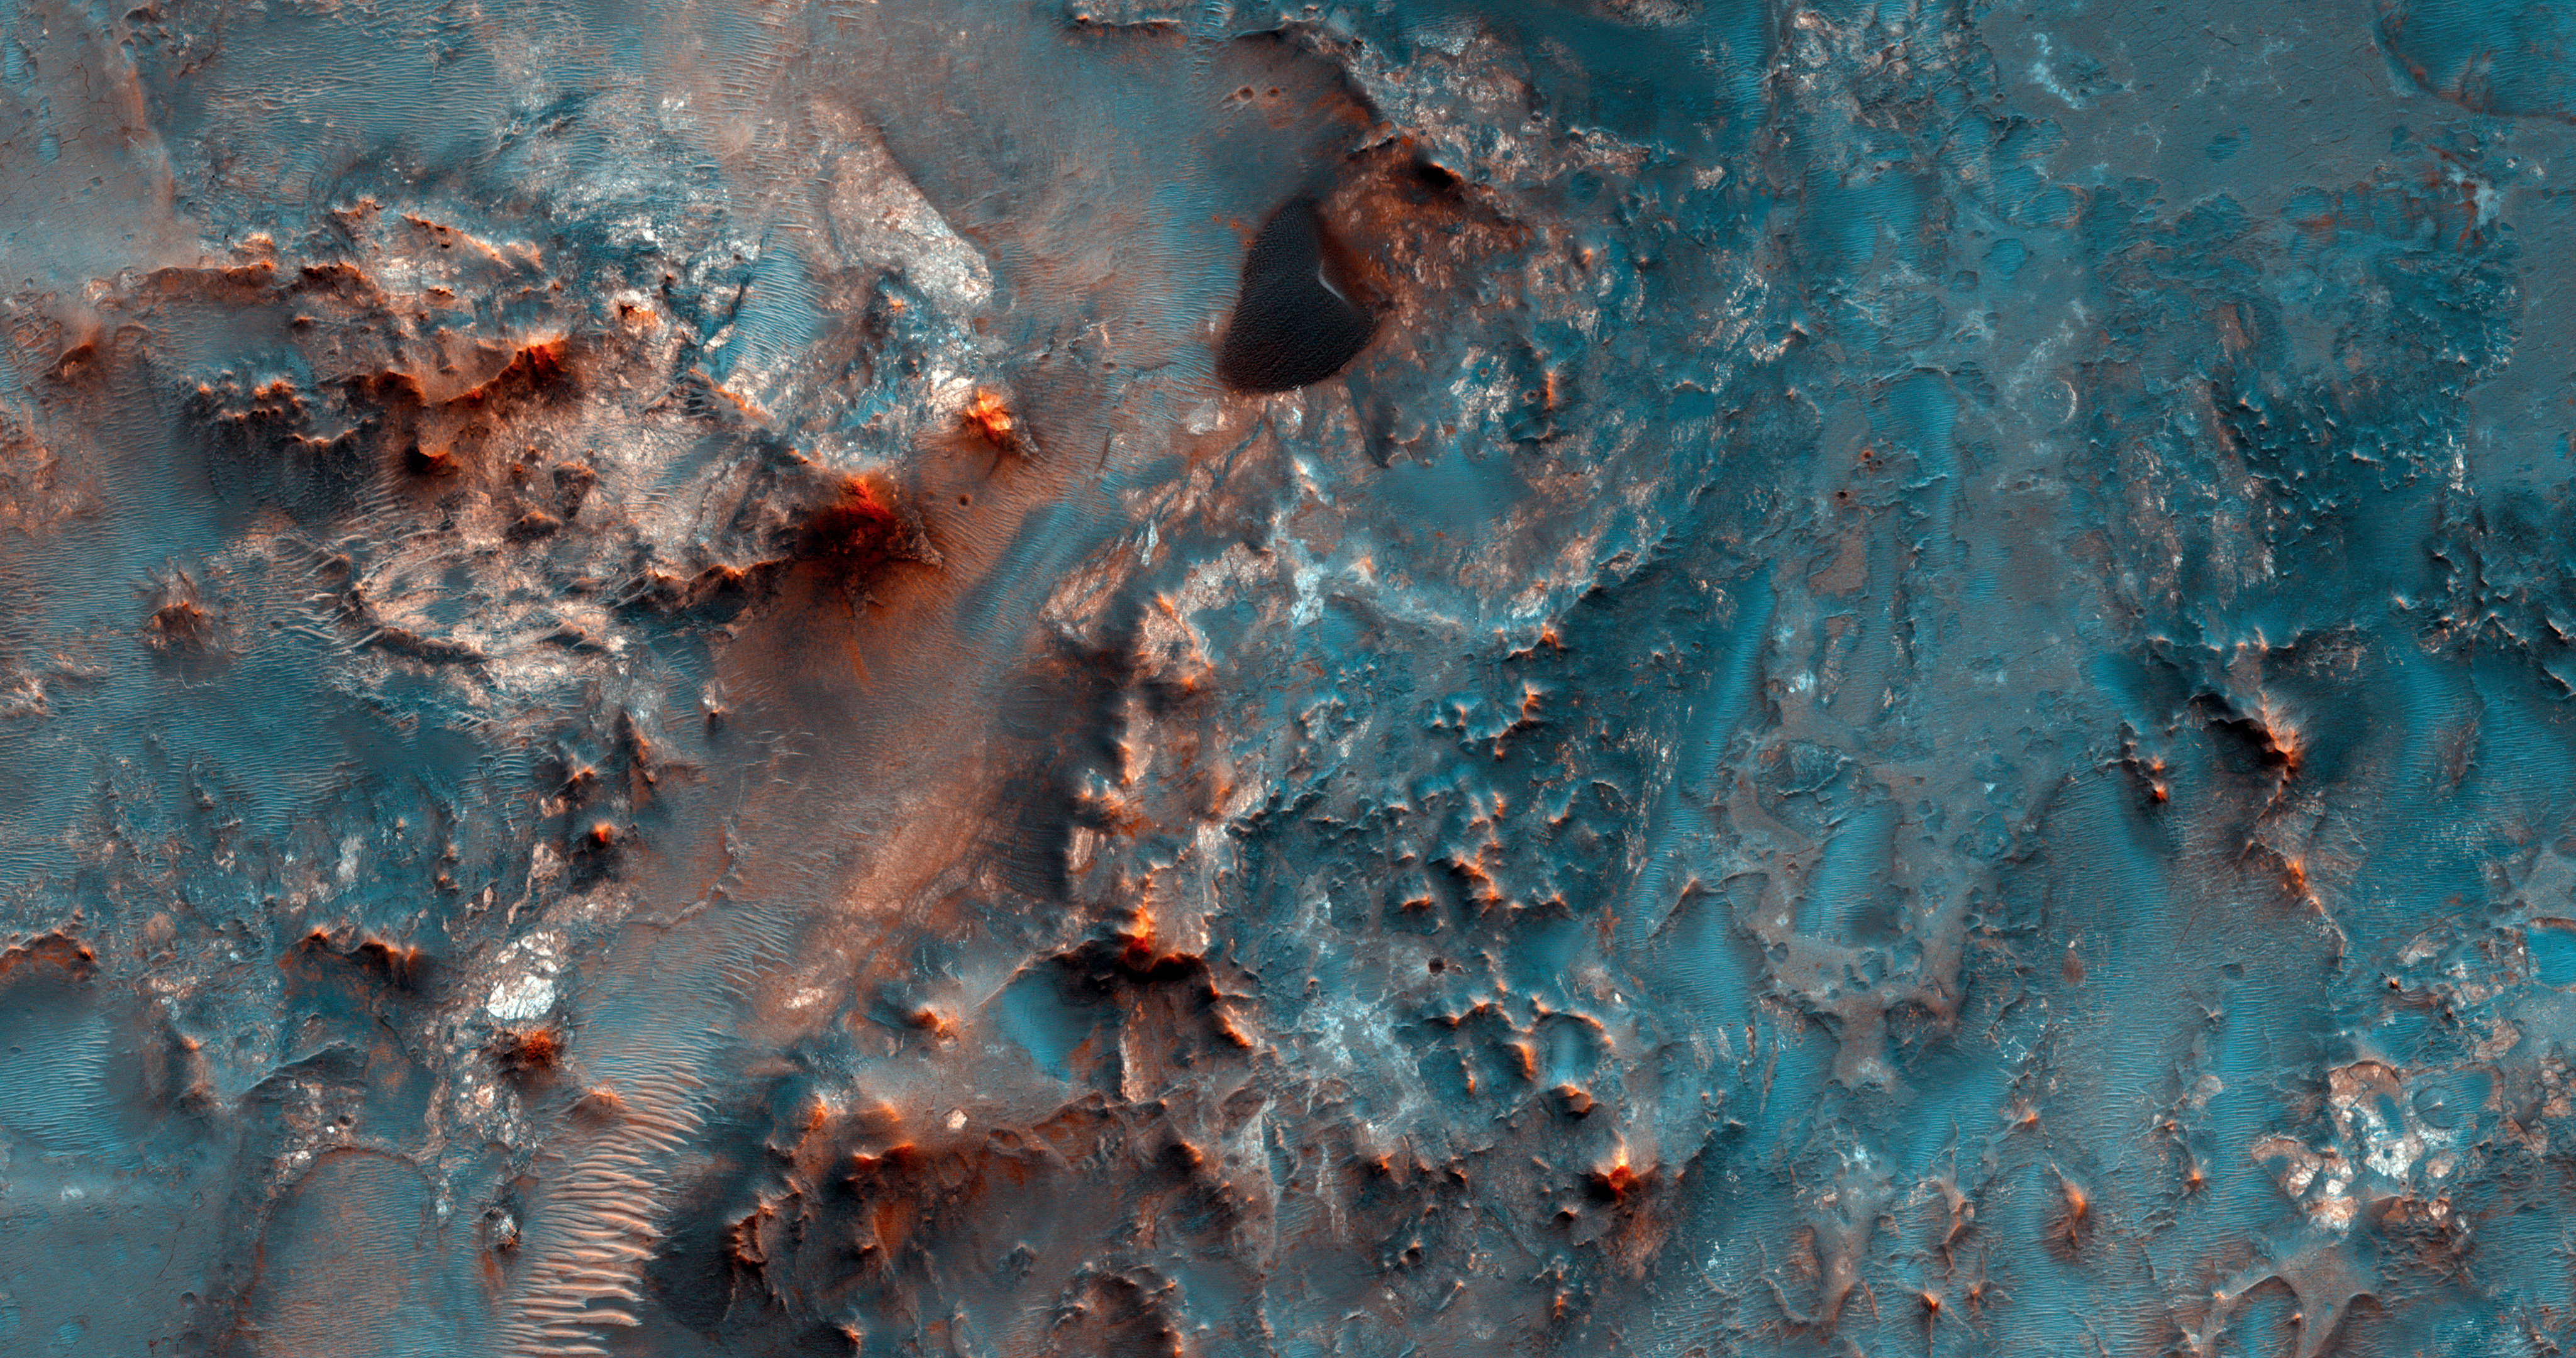 General 4096x2160 Mars dunes landscape